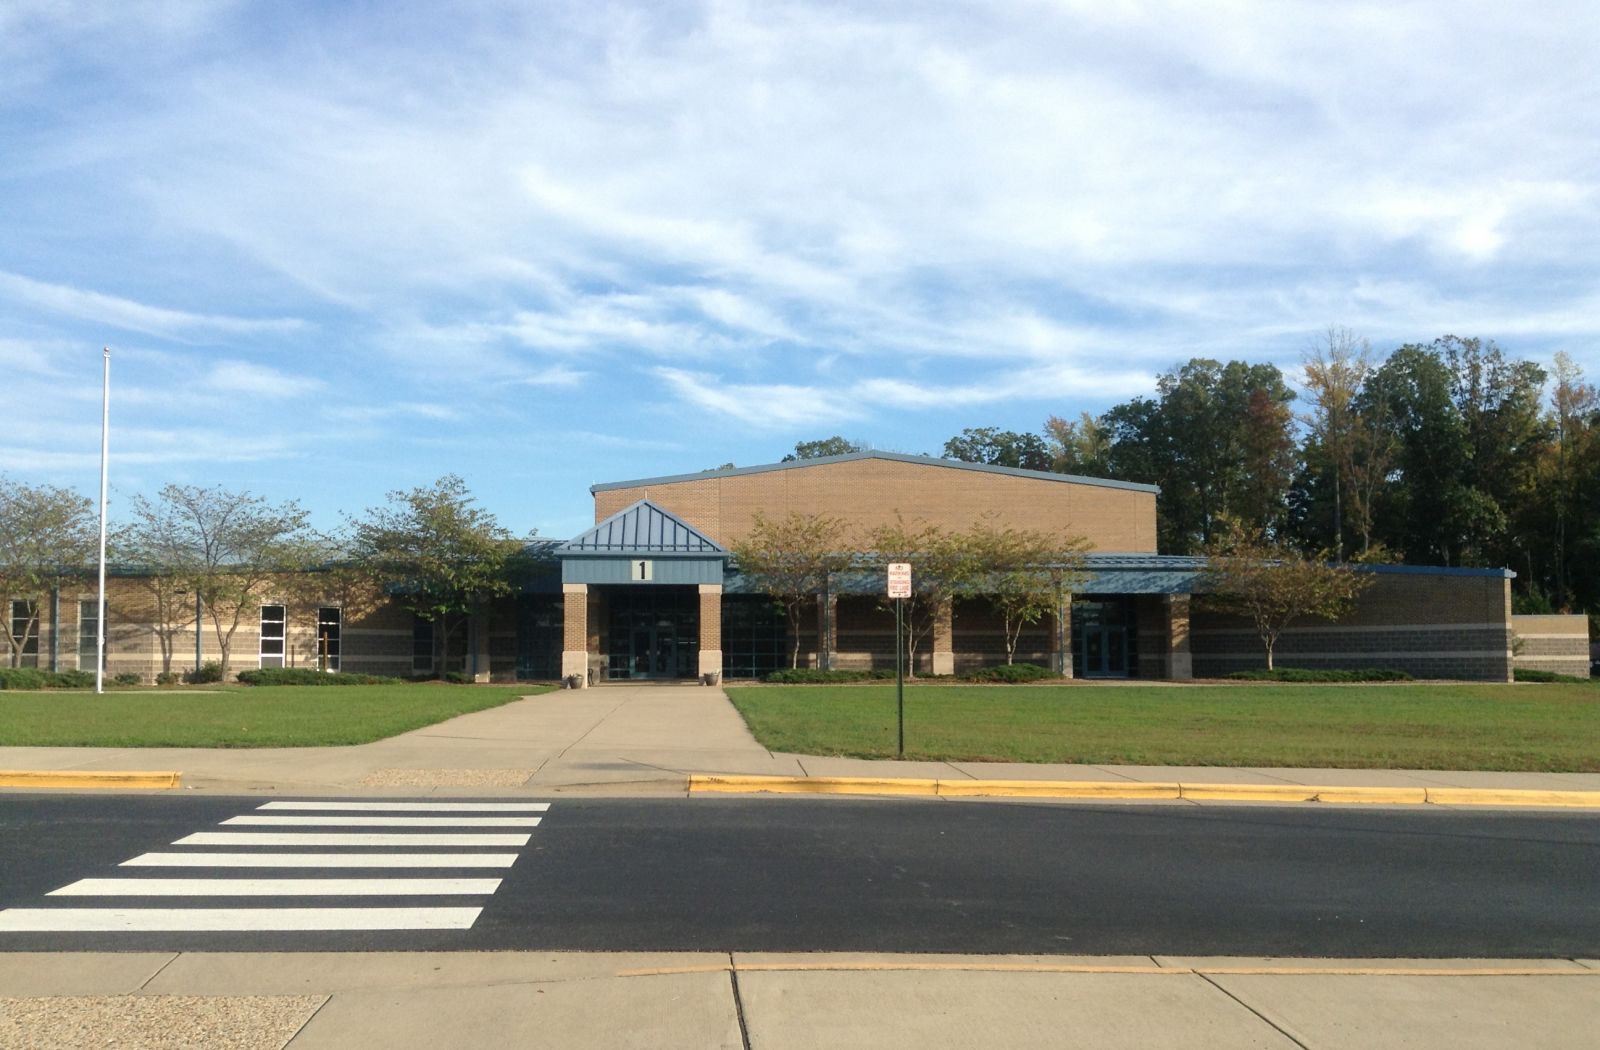 Mary William Elementary School building